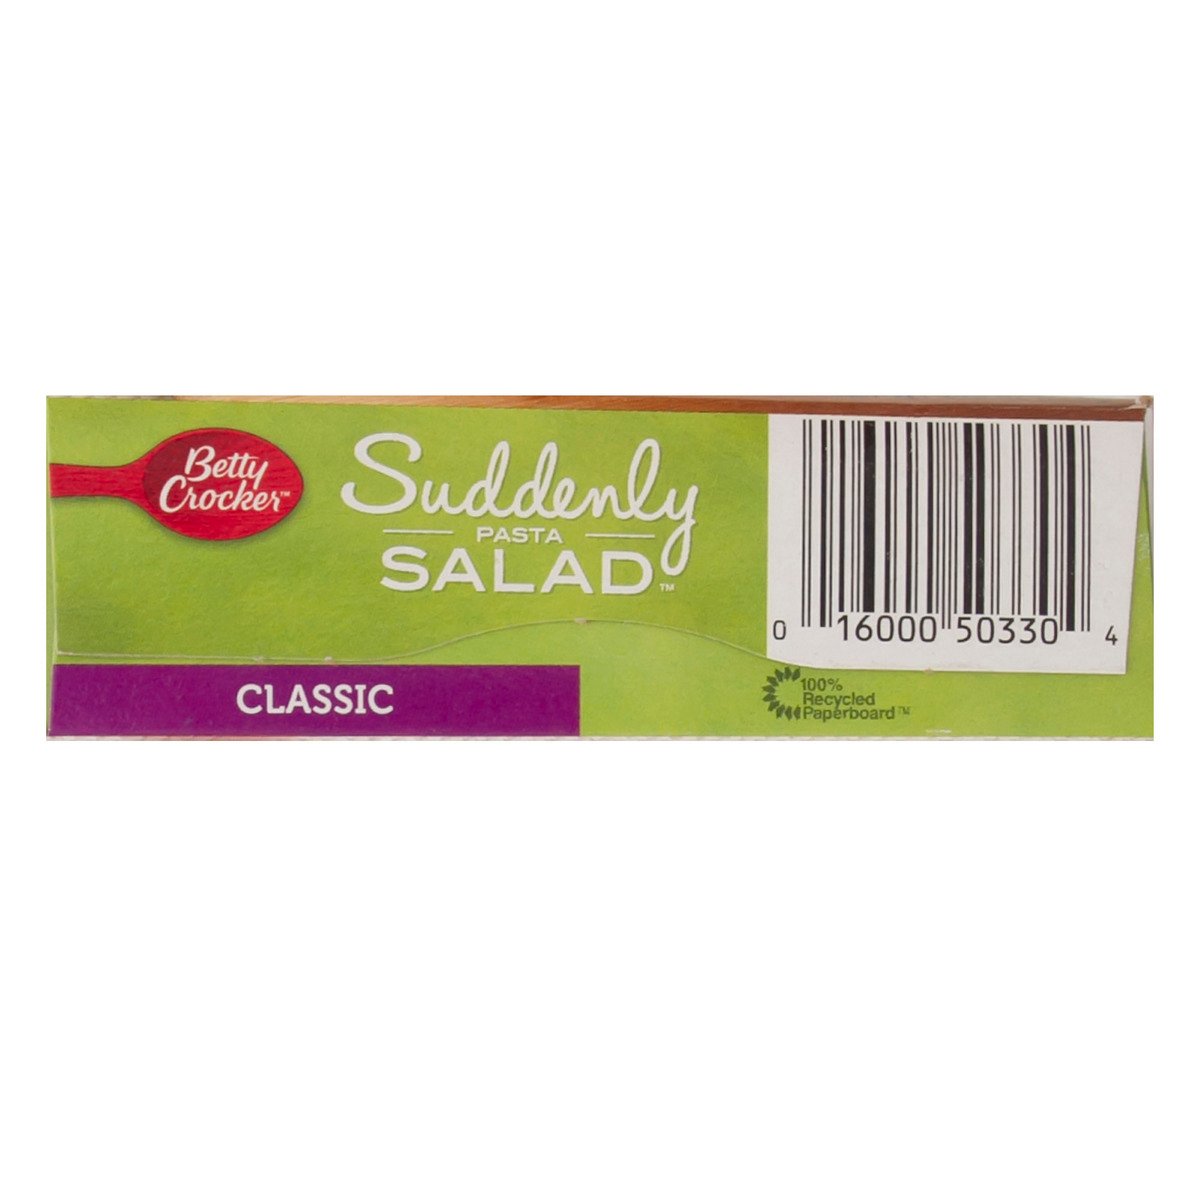 Betty Crocker Classic Suddenly Pasta Salad 220 g